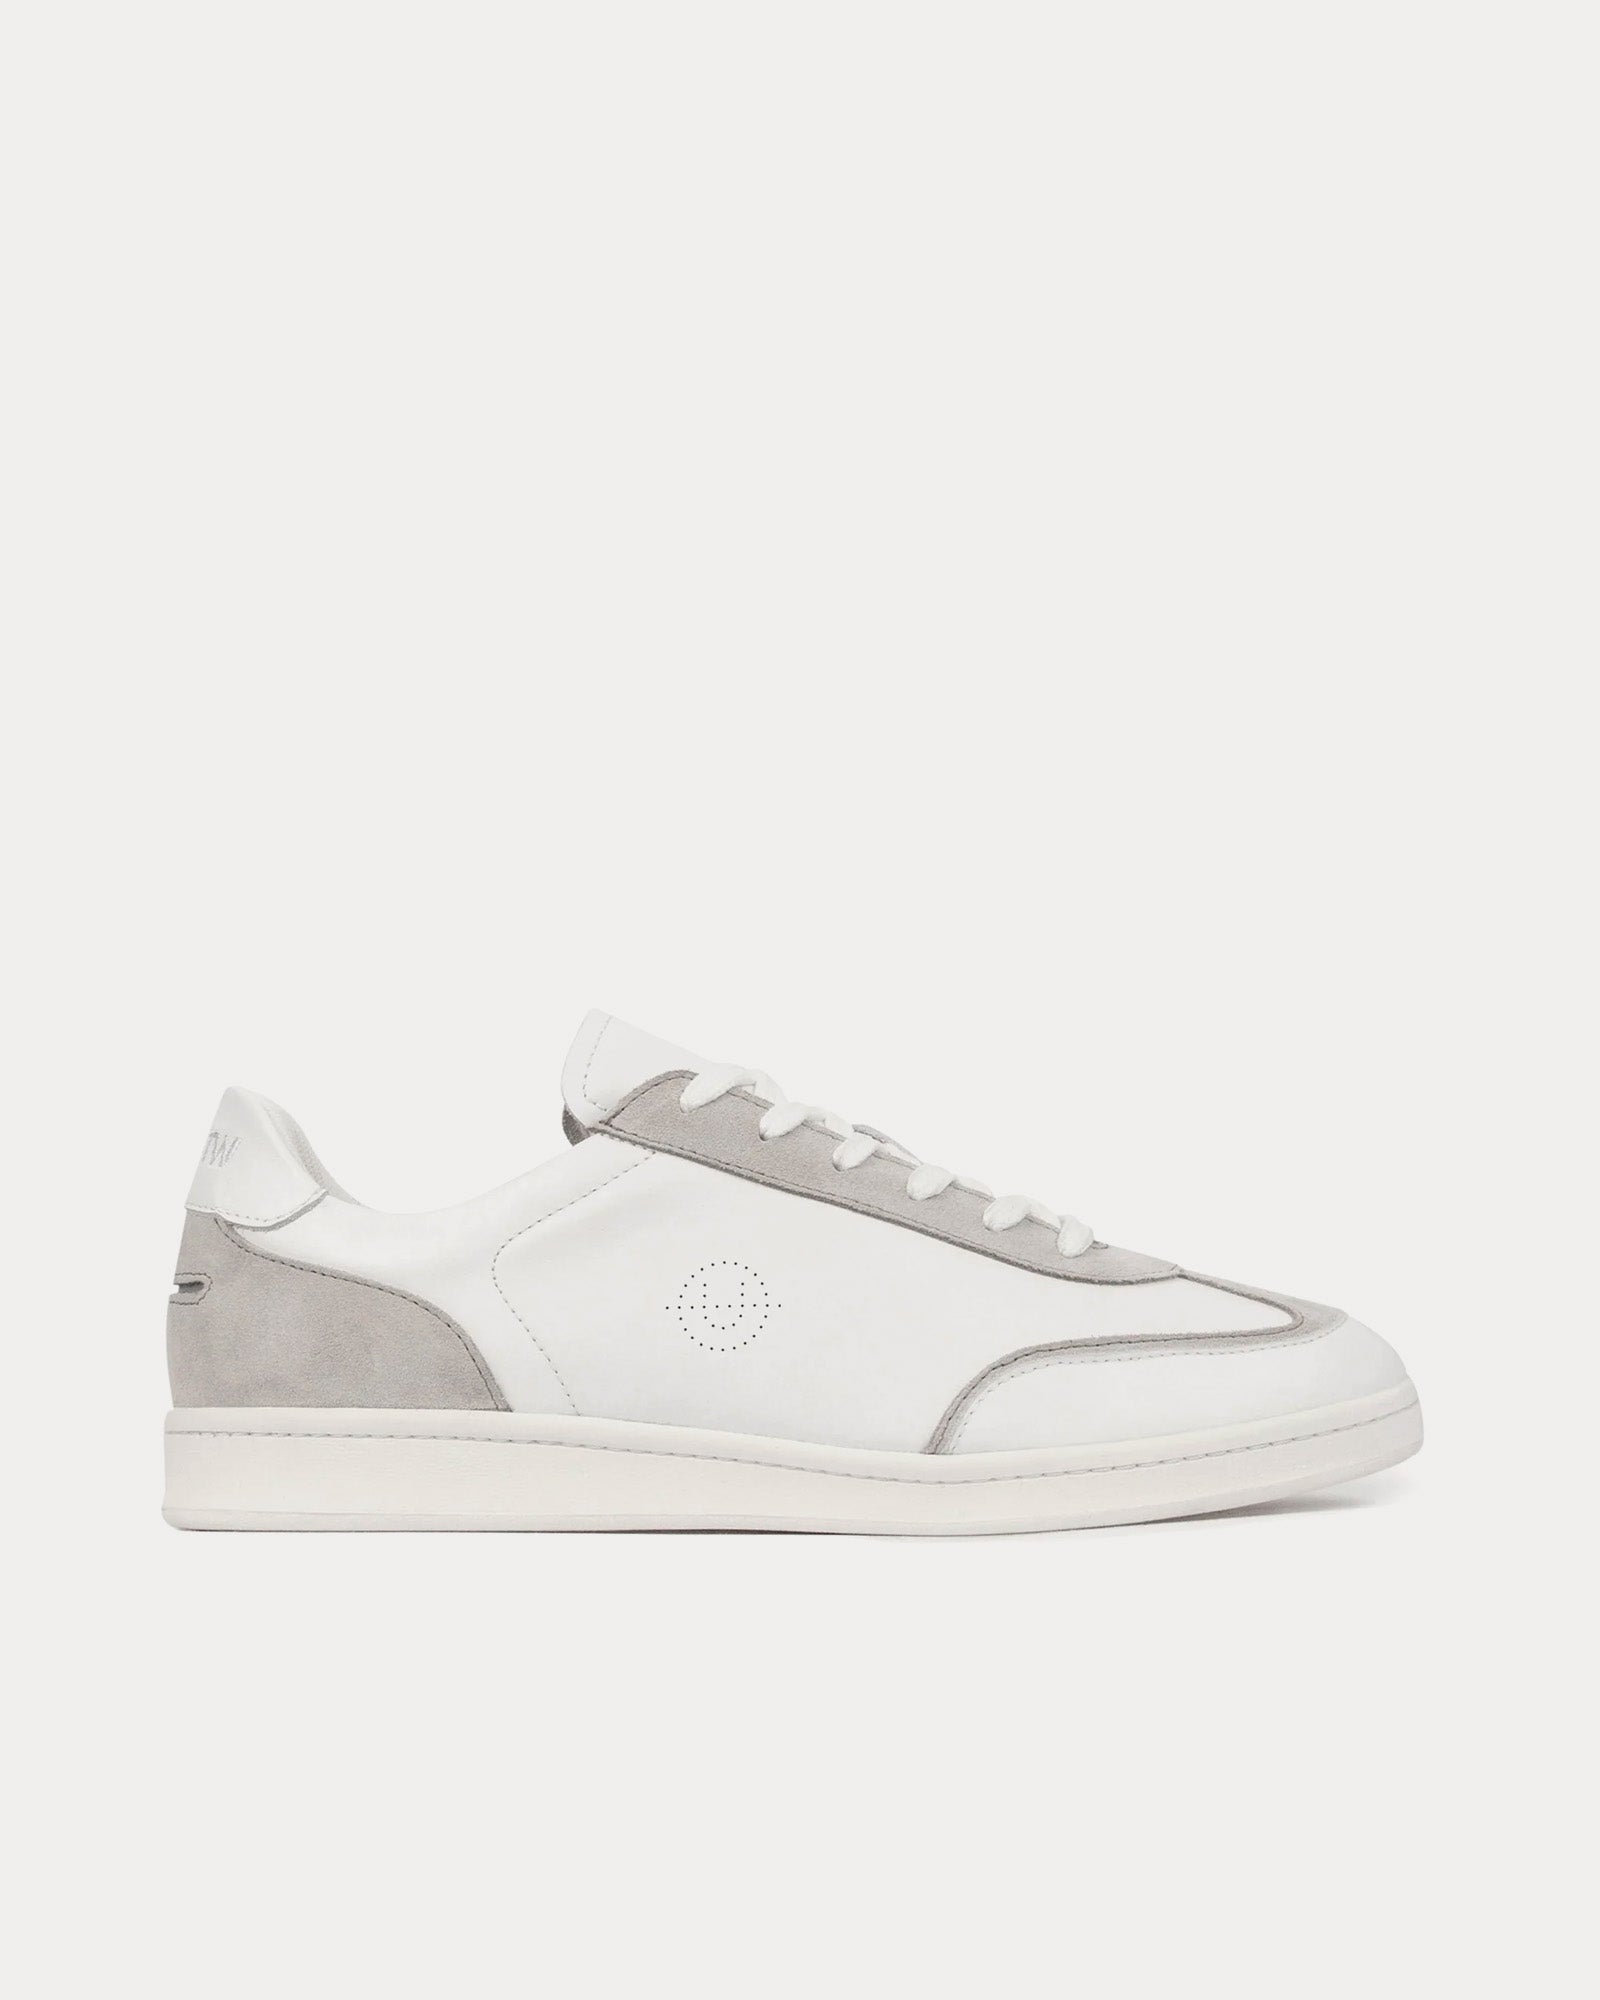 Unseen Footwear - Portelet Leather White / Grey Low Top Sneakers